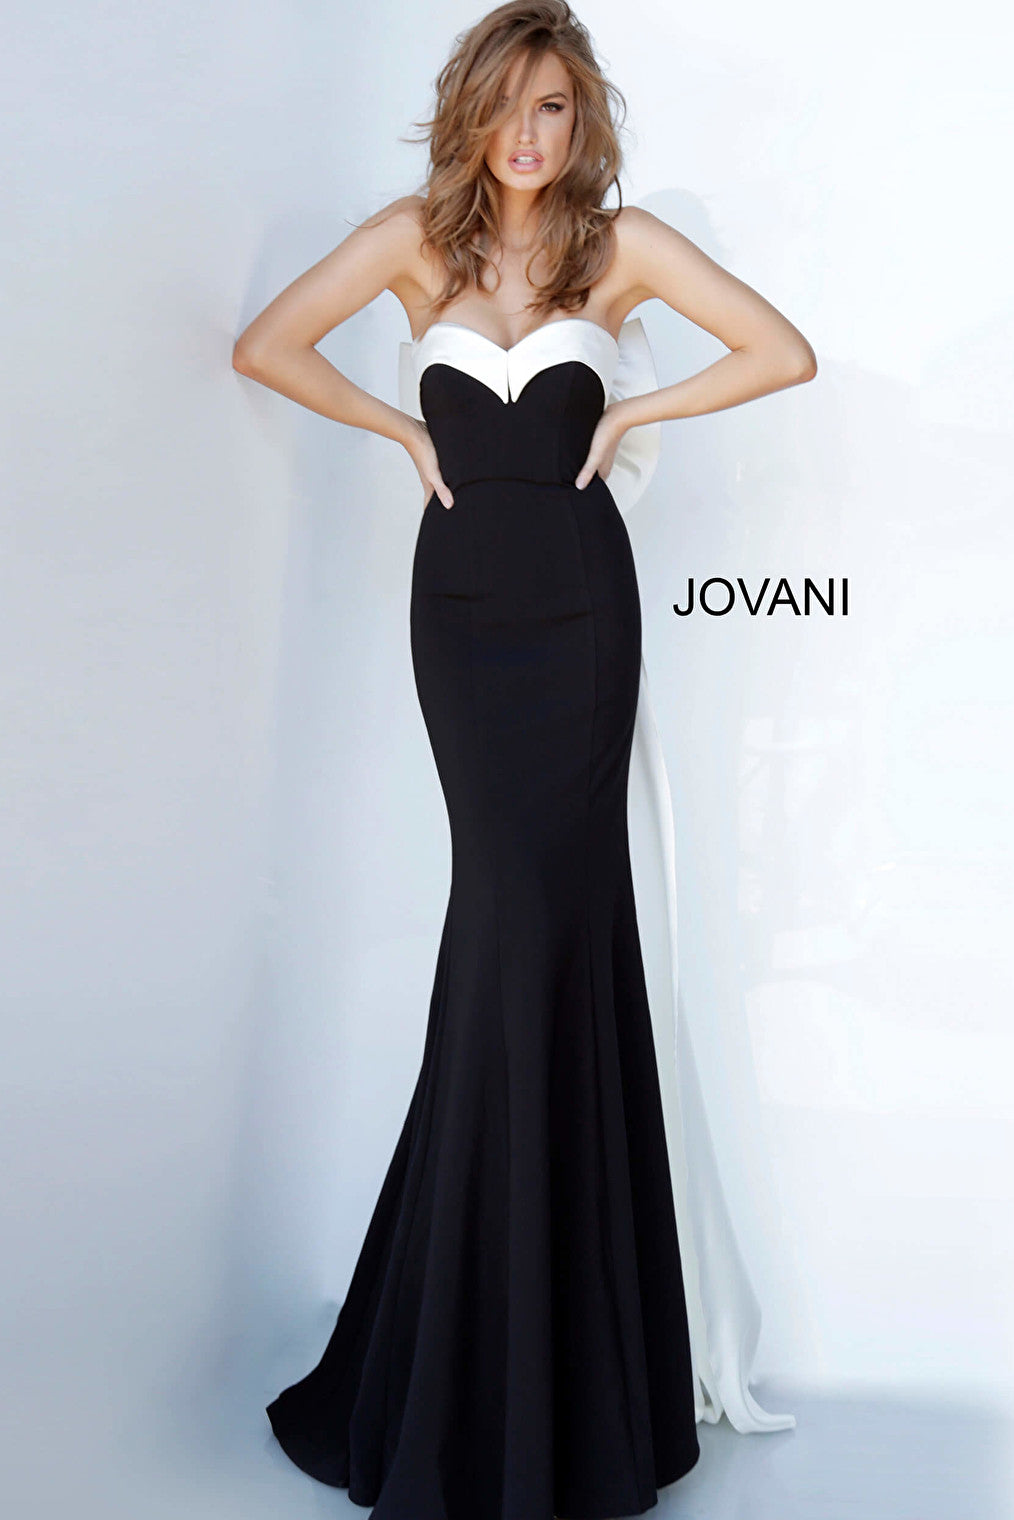 Black white form fitting evening dress Jovani 12020